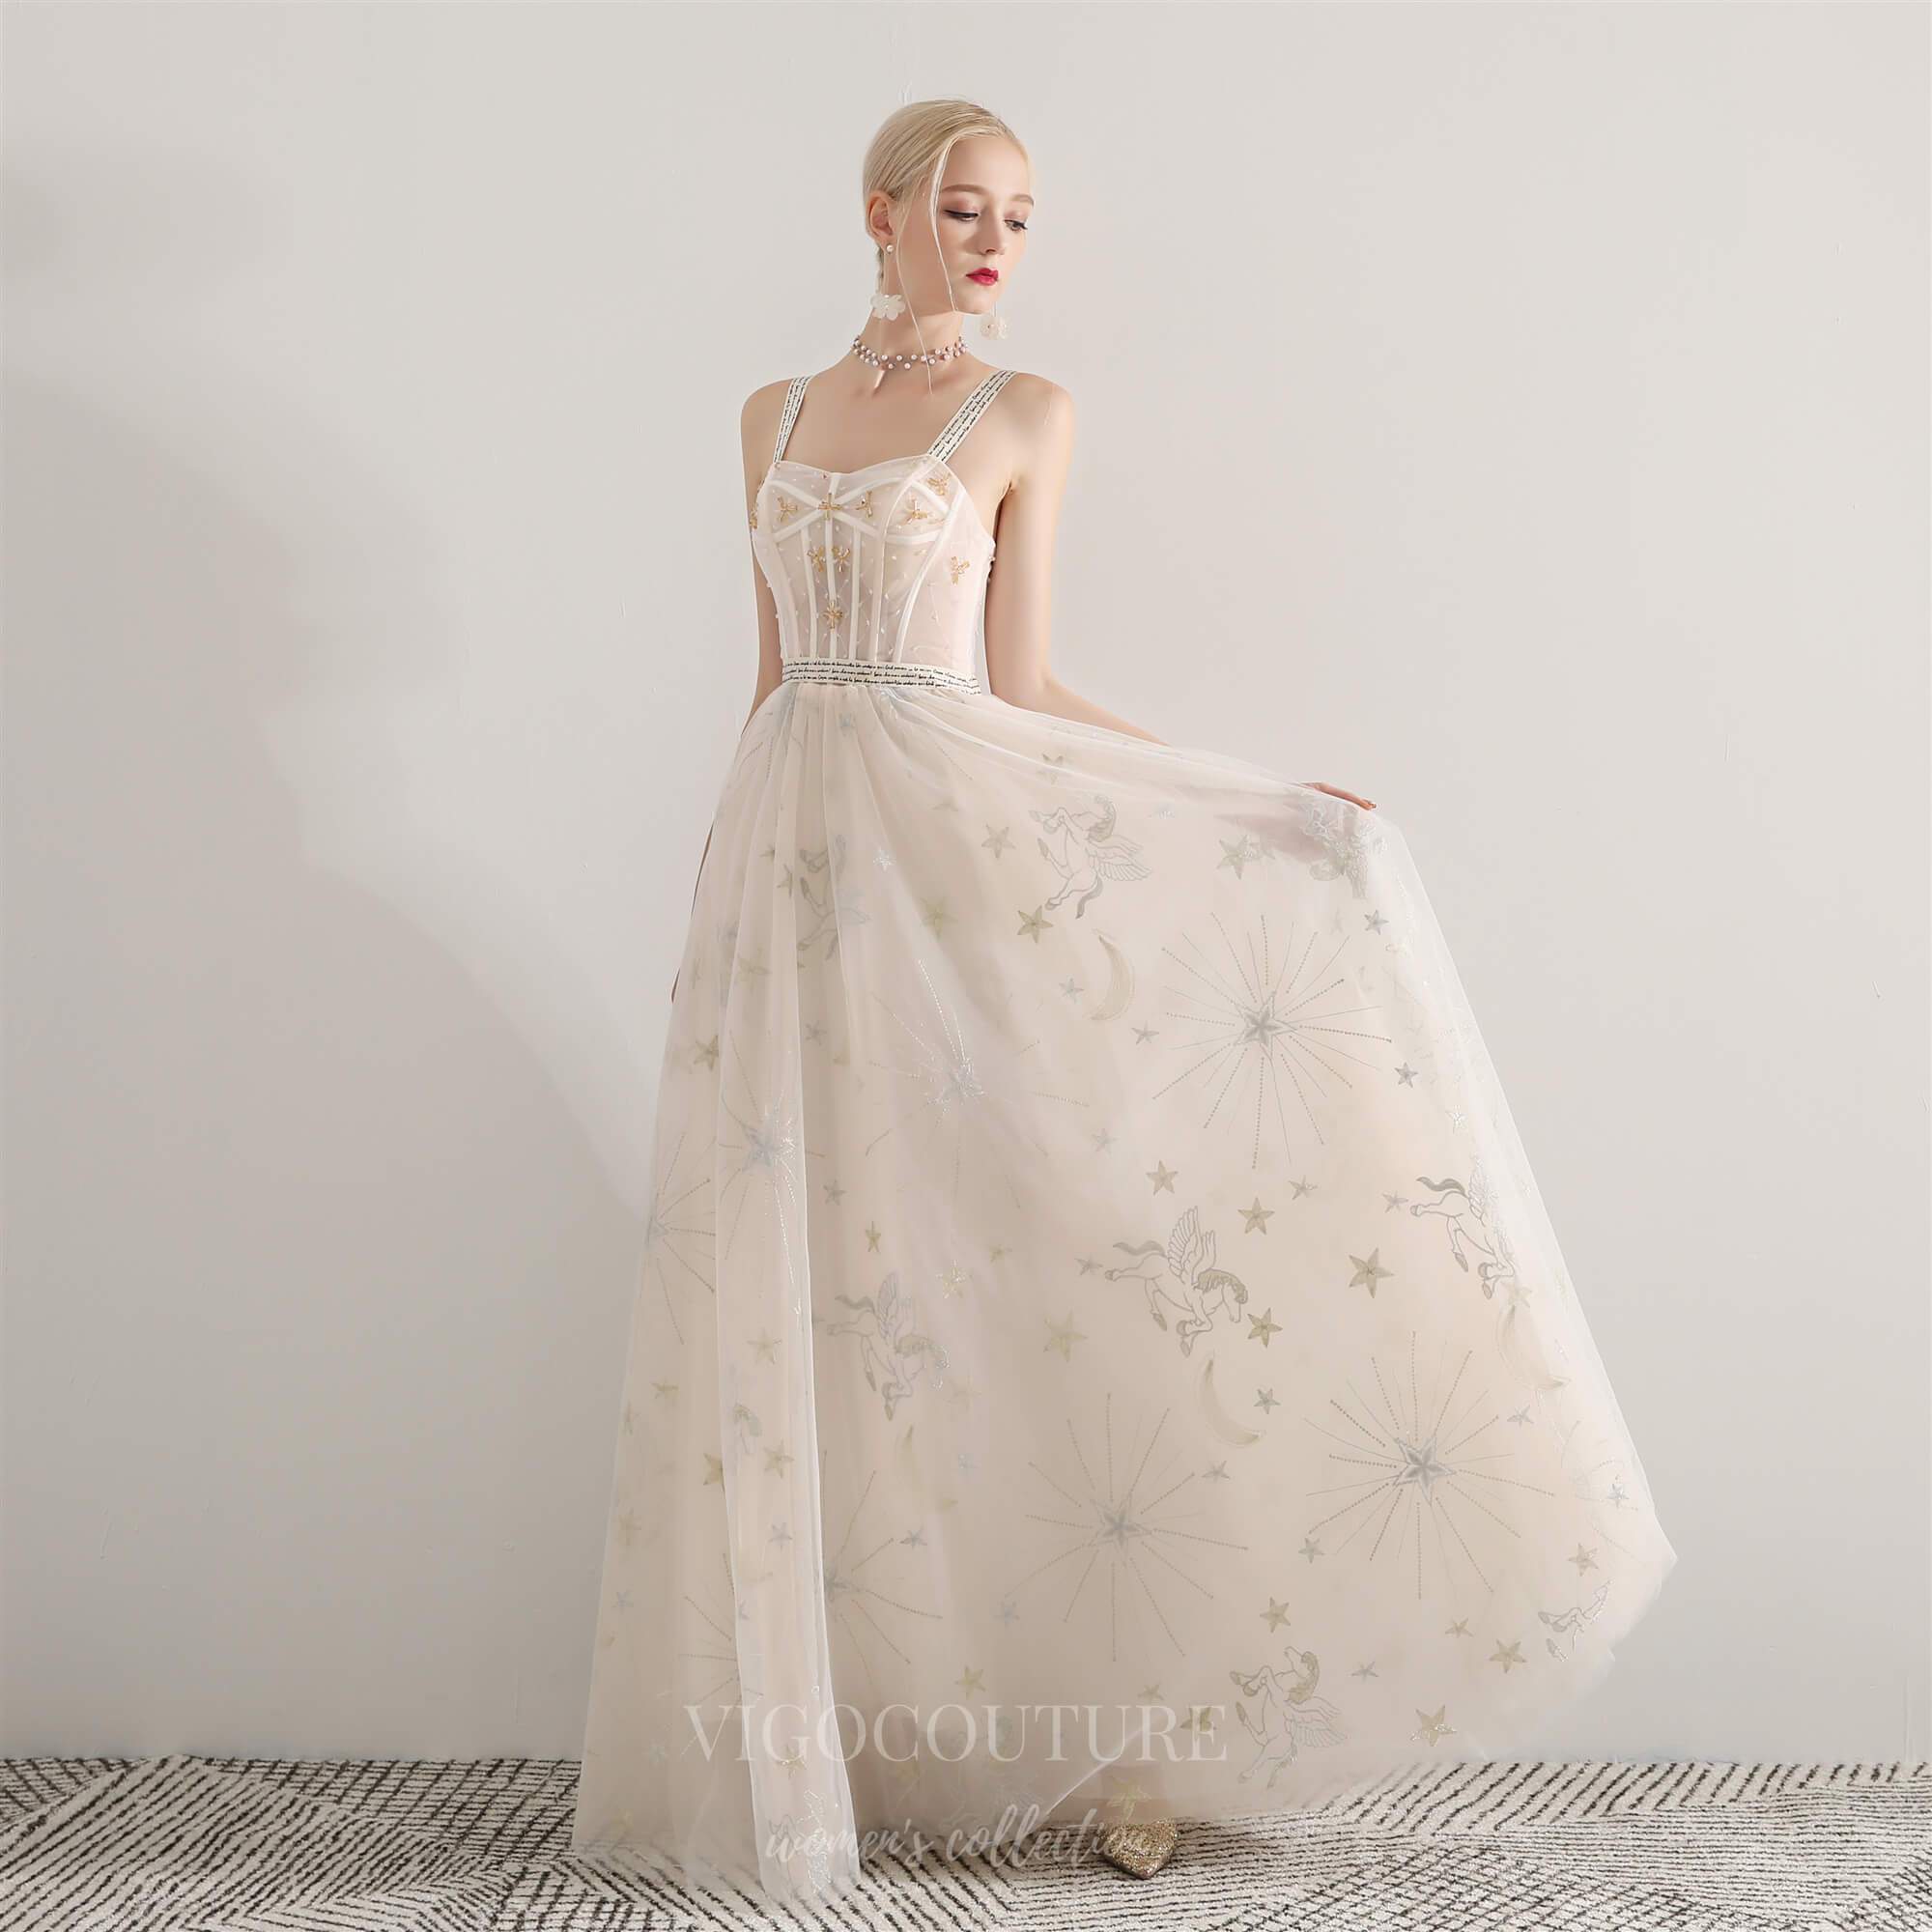 vigocouture-Ivory Spaghetti Strap Prom Dress 20702-Prom Dresses-vigocouture-